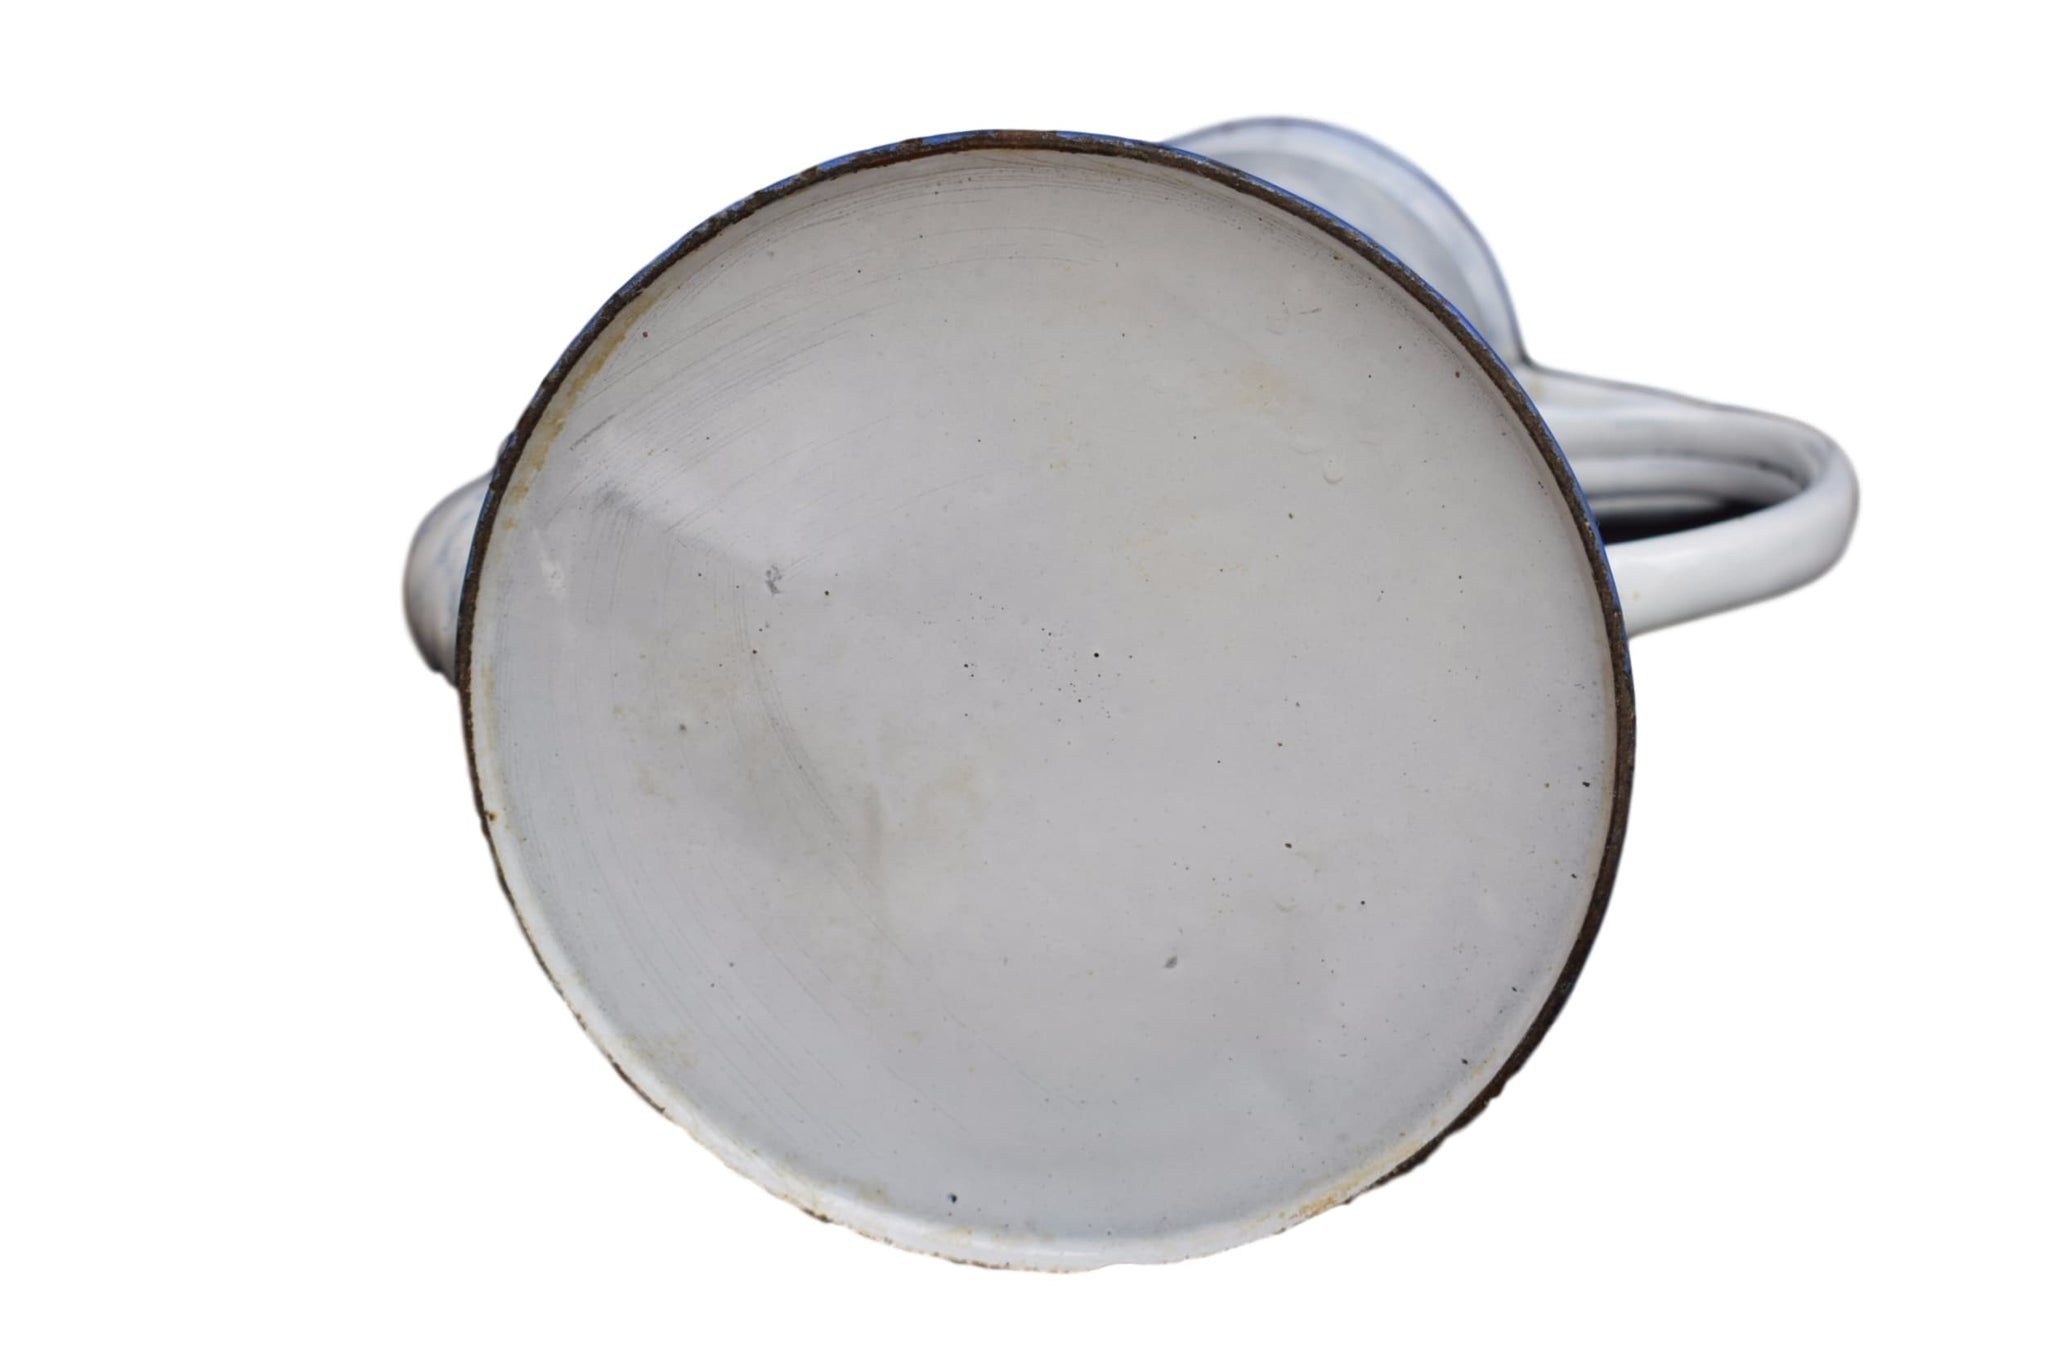 French Vintage Graniteware Enamel Coffee Pot - Charmantiques